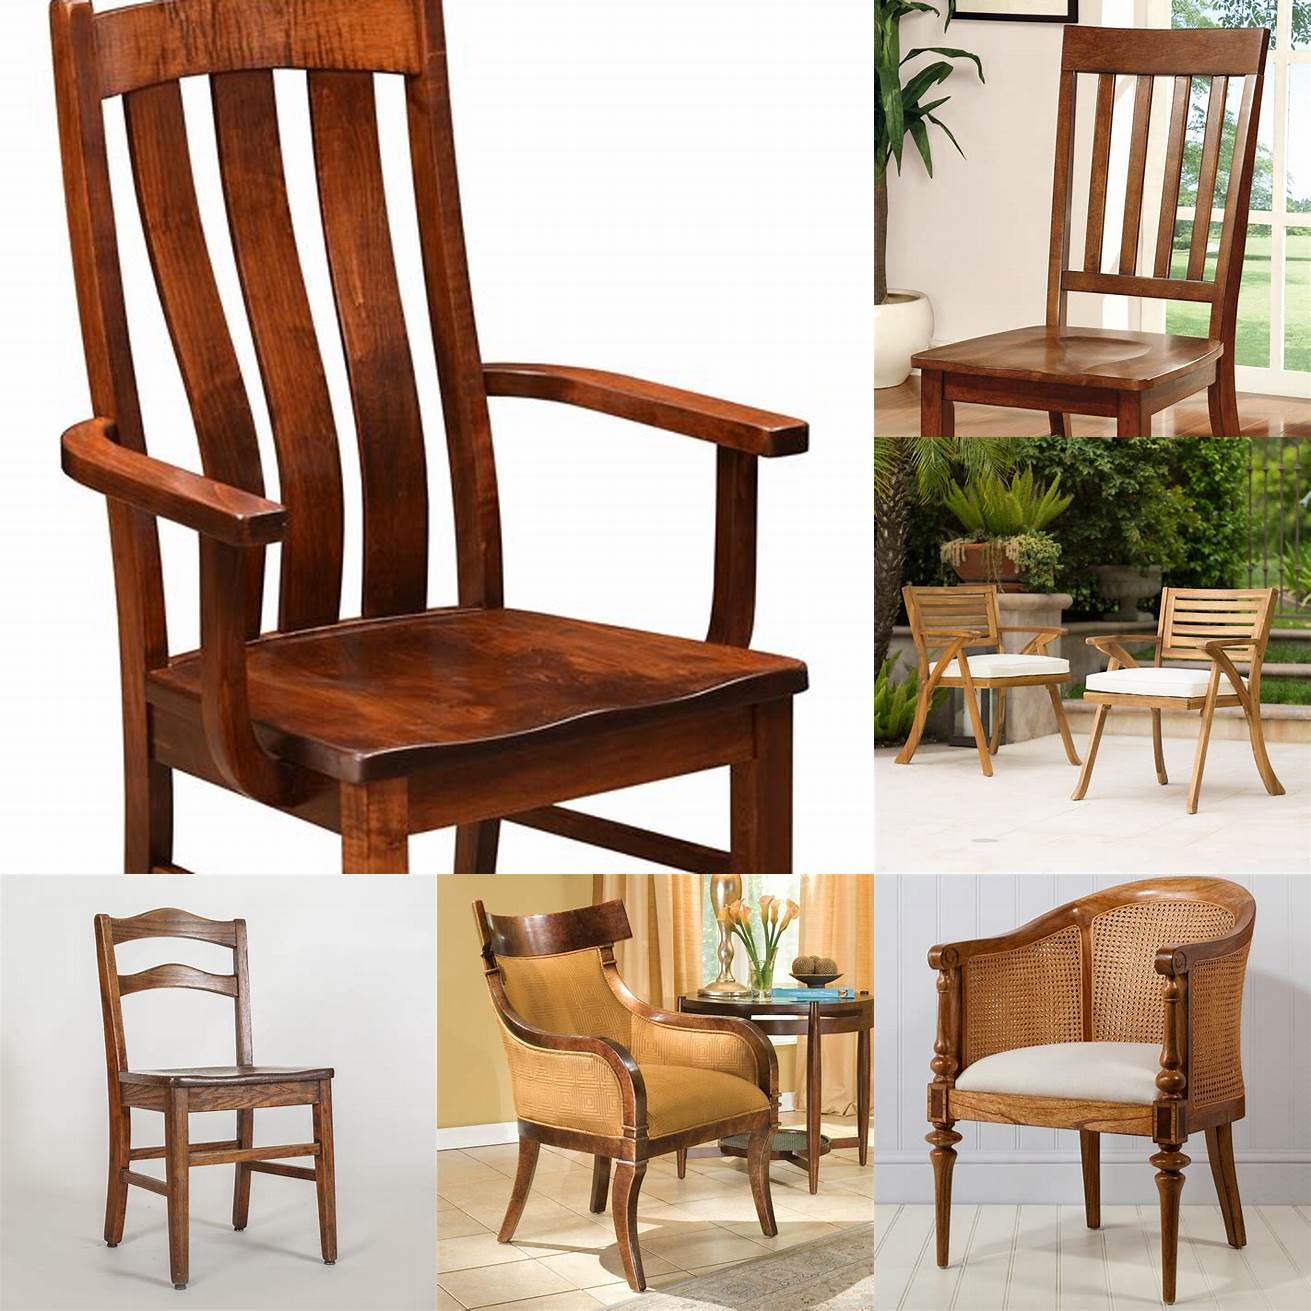 A Wood Chair